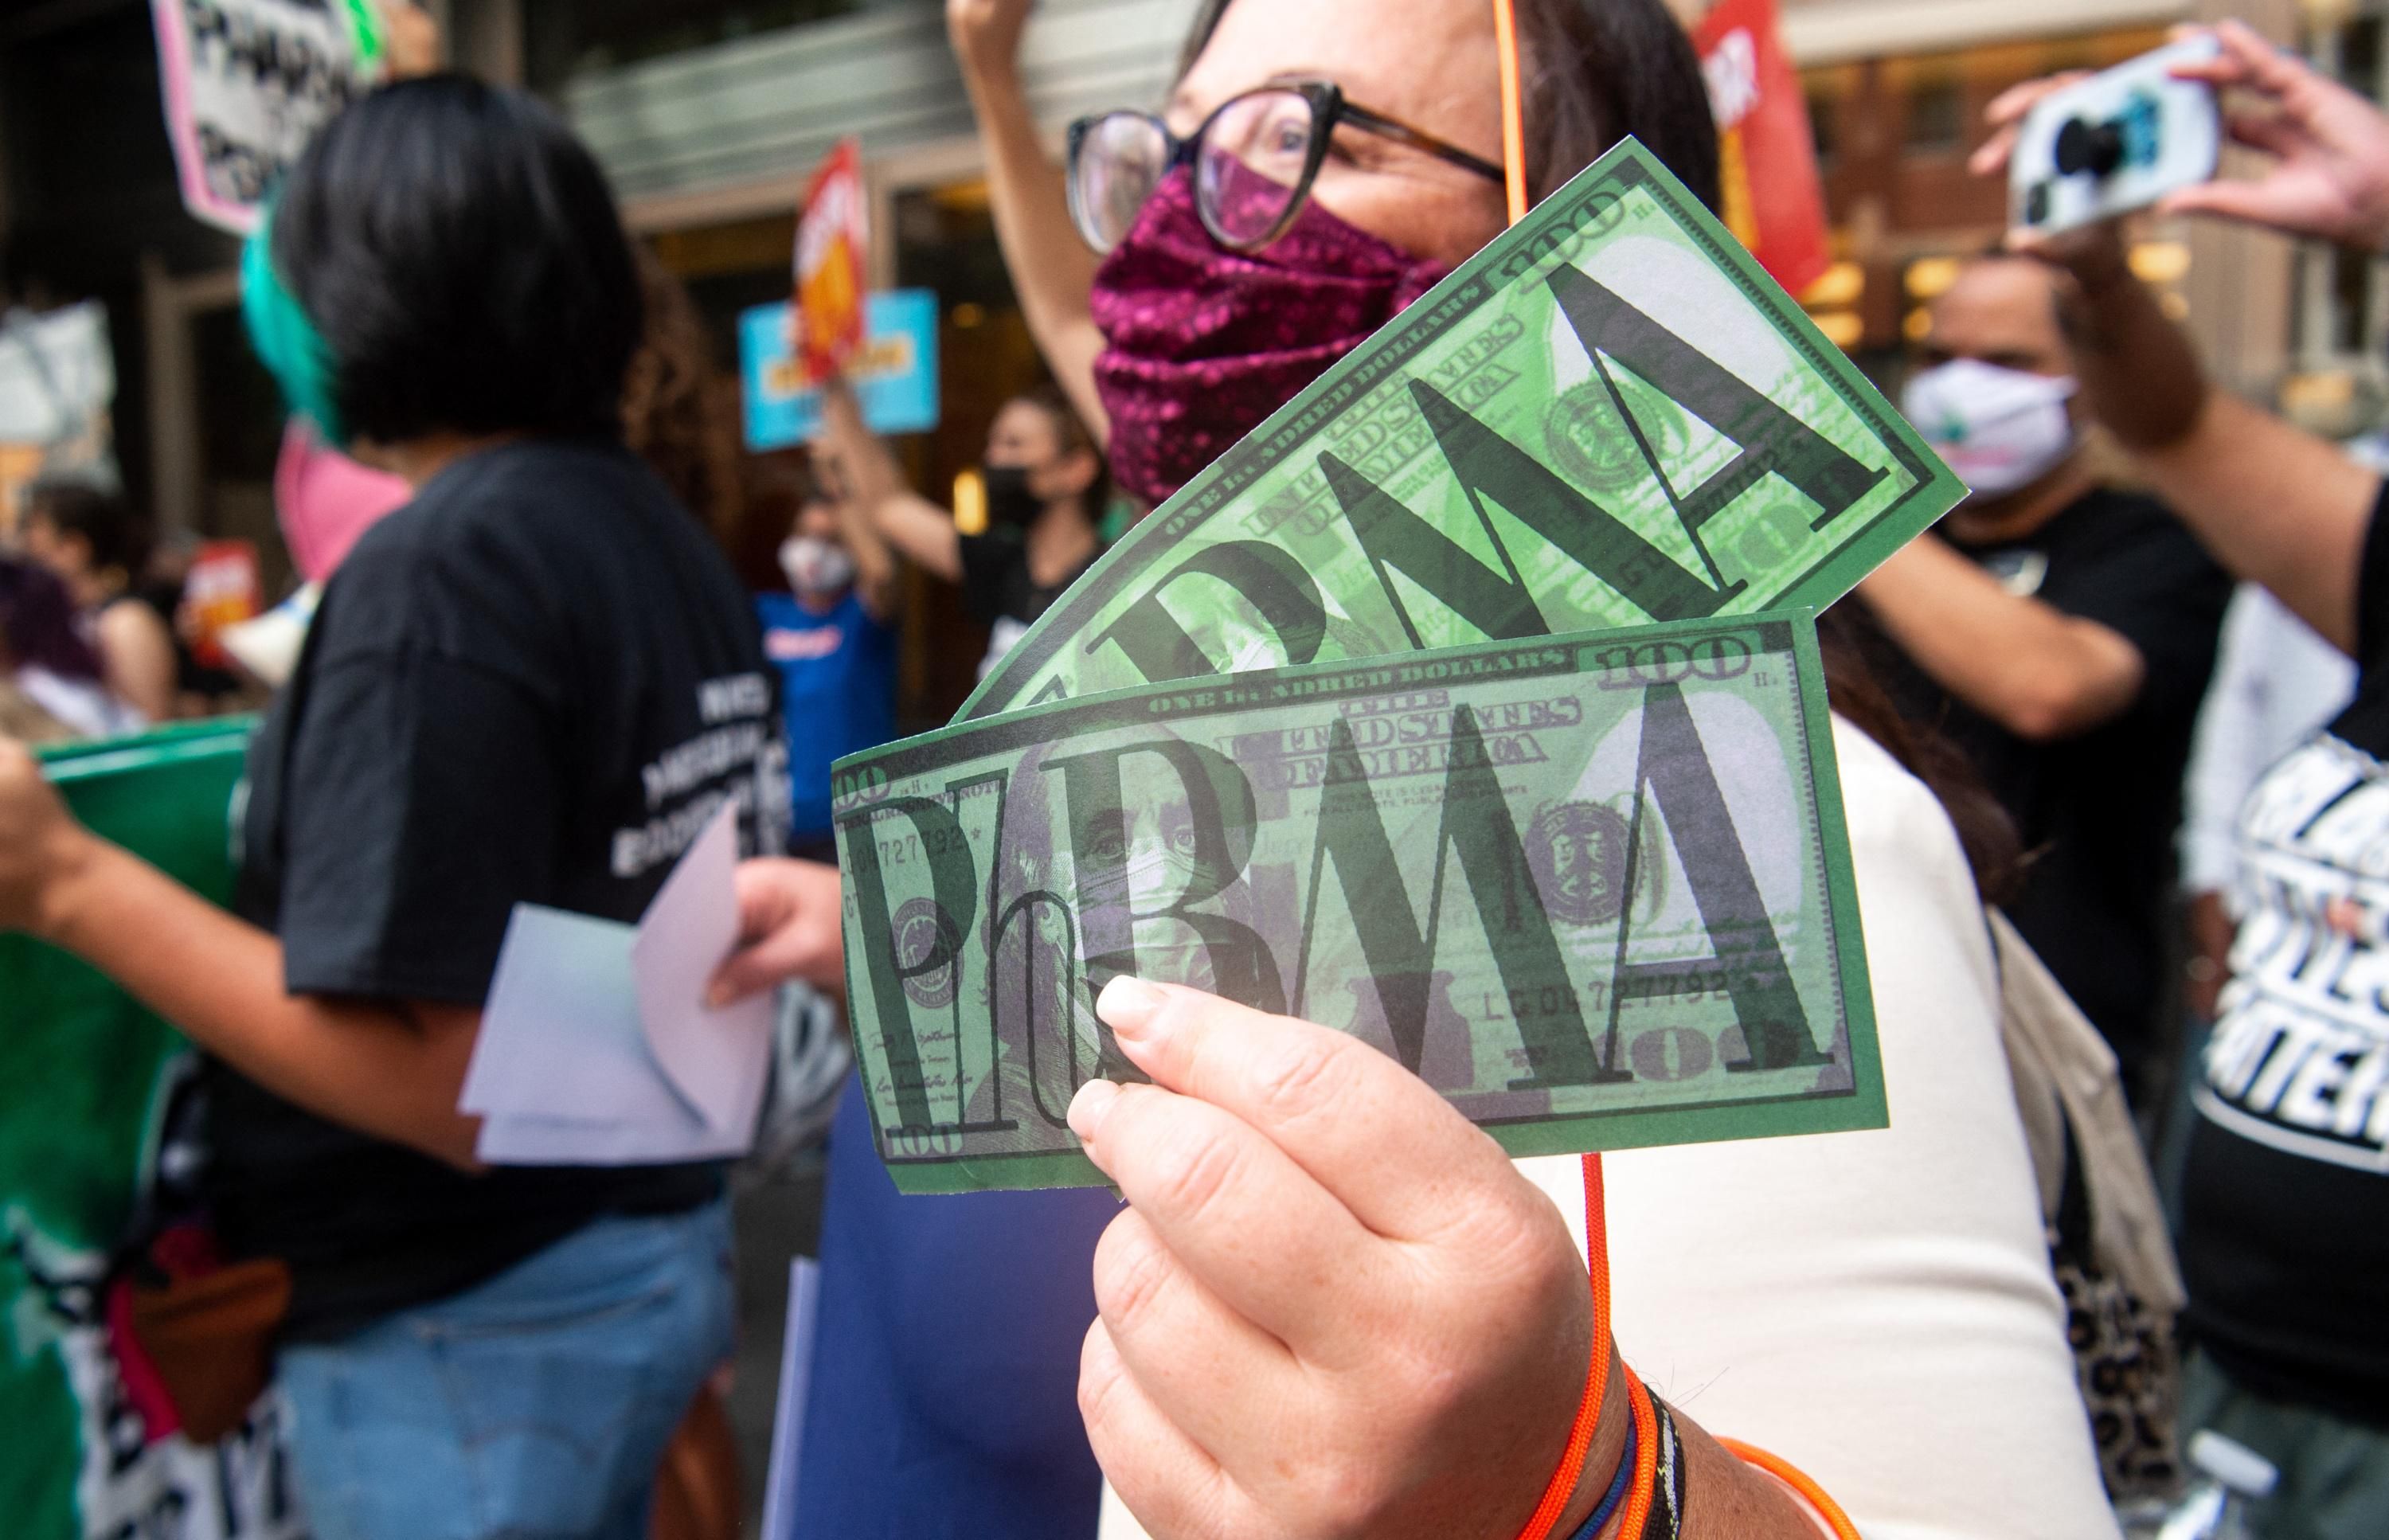 Demonstrators protest outside PhRMA headquarters.